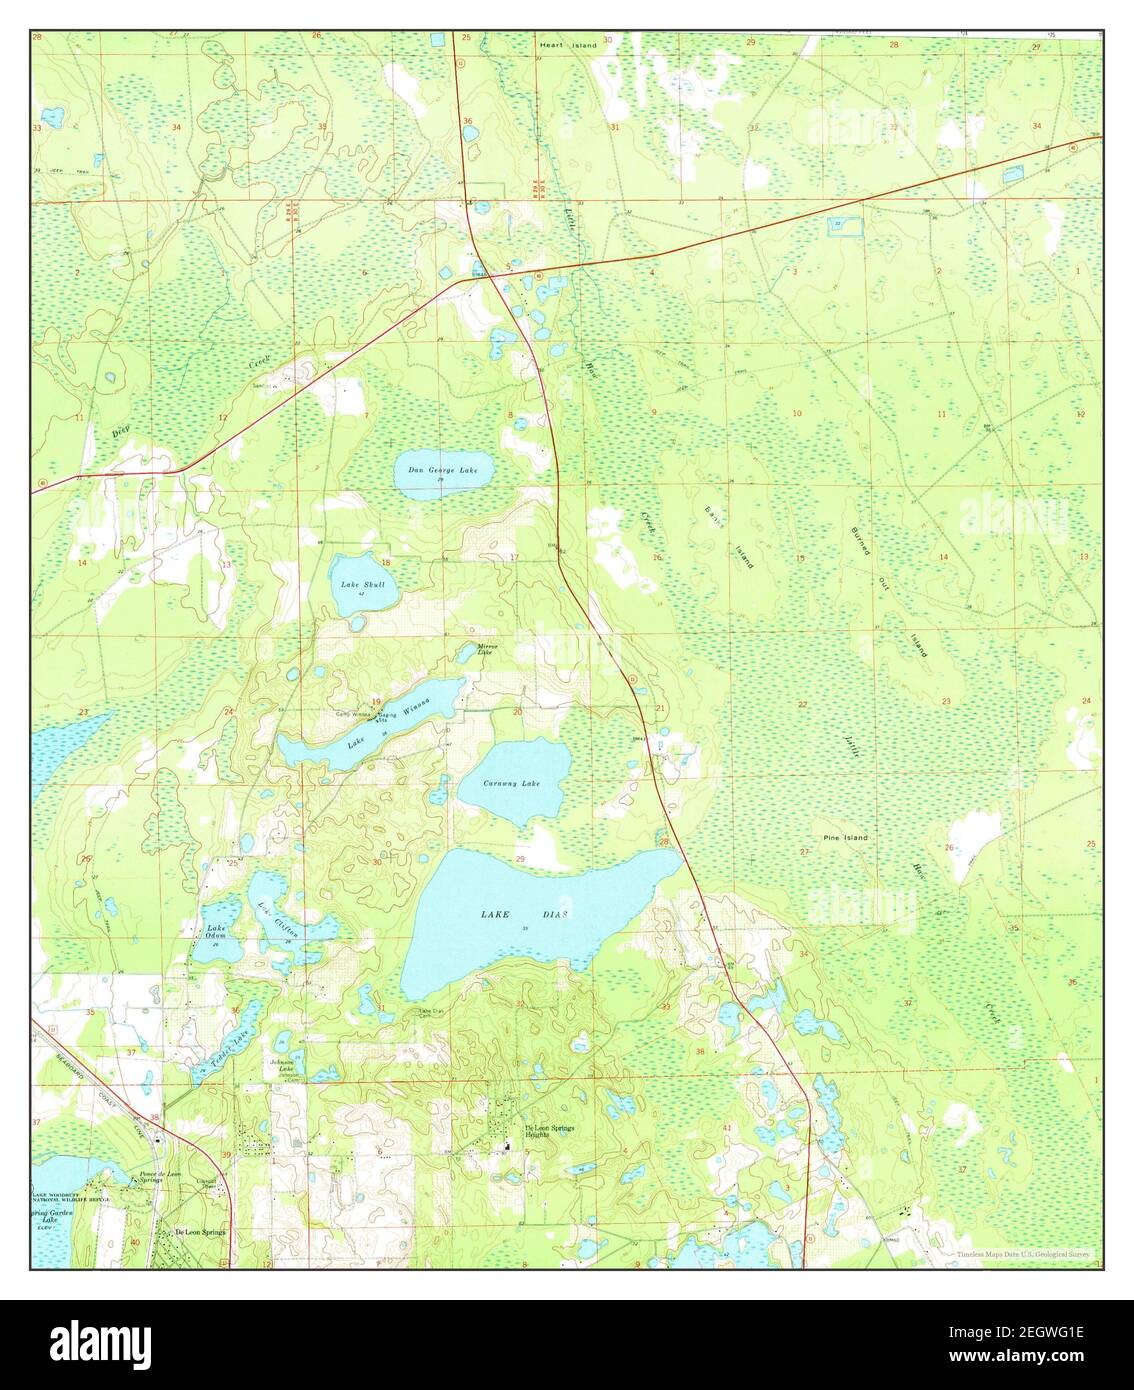 Lake Dias, Florida, map 1971, 1:24000, United States of America by Timeless Maps, data U.S. Geological Survey Stock Photo